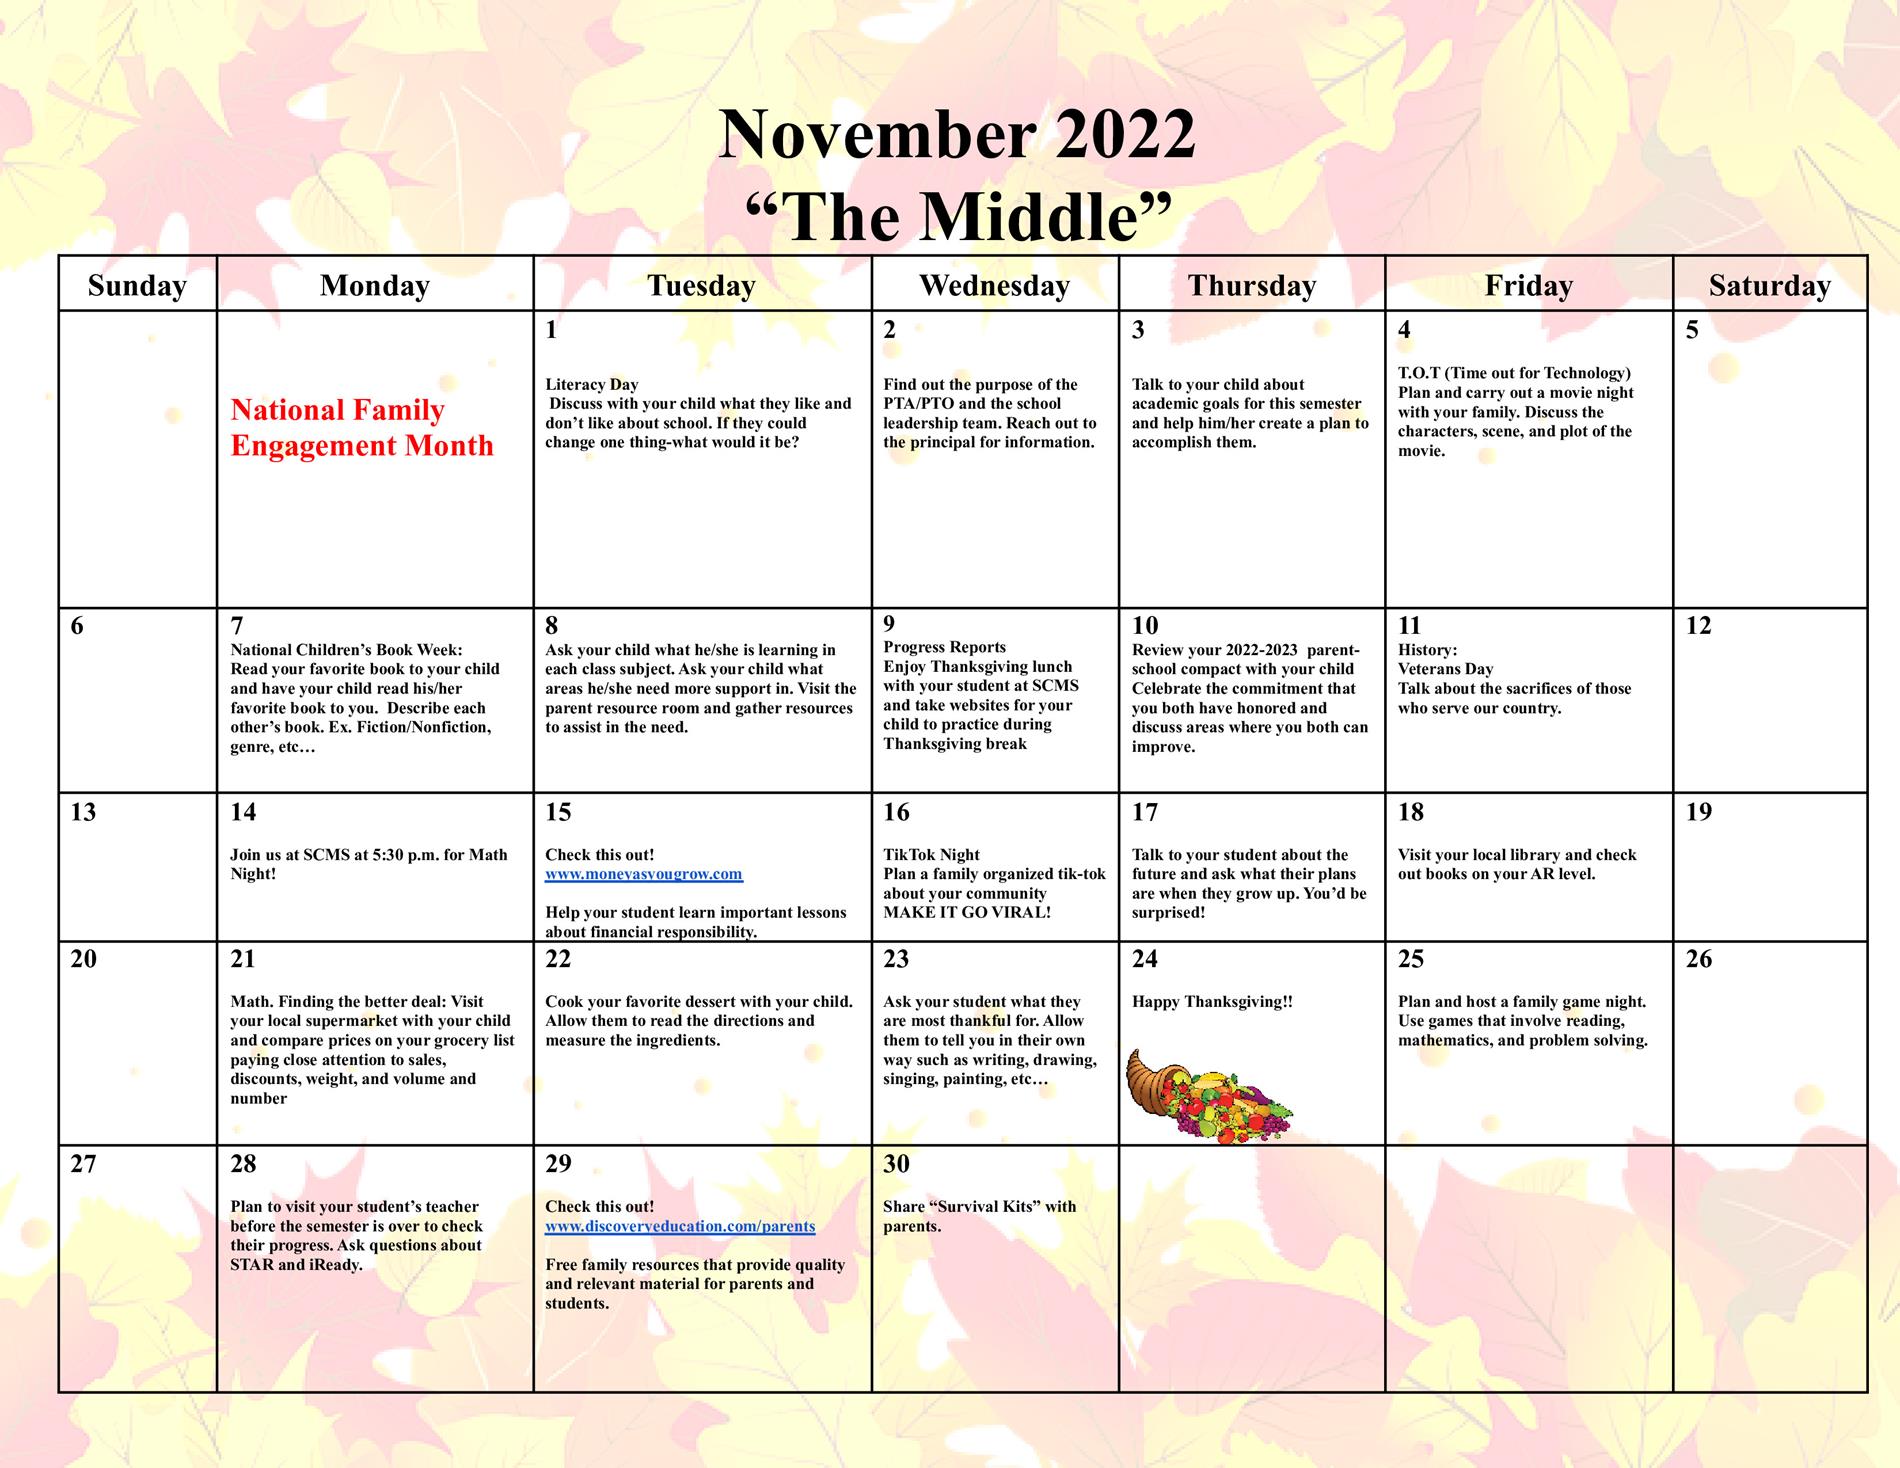 SCMS Family Engagement Calendar